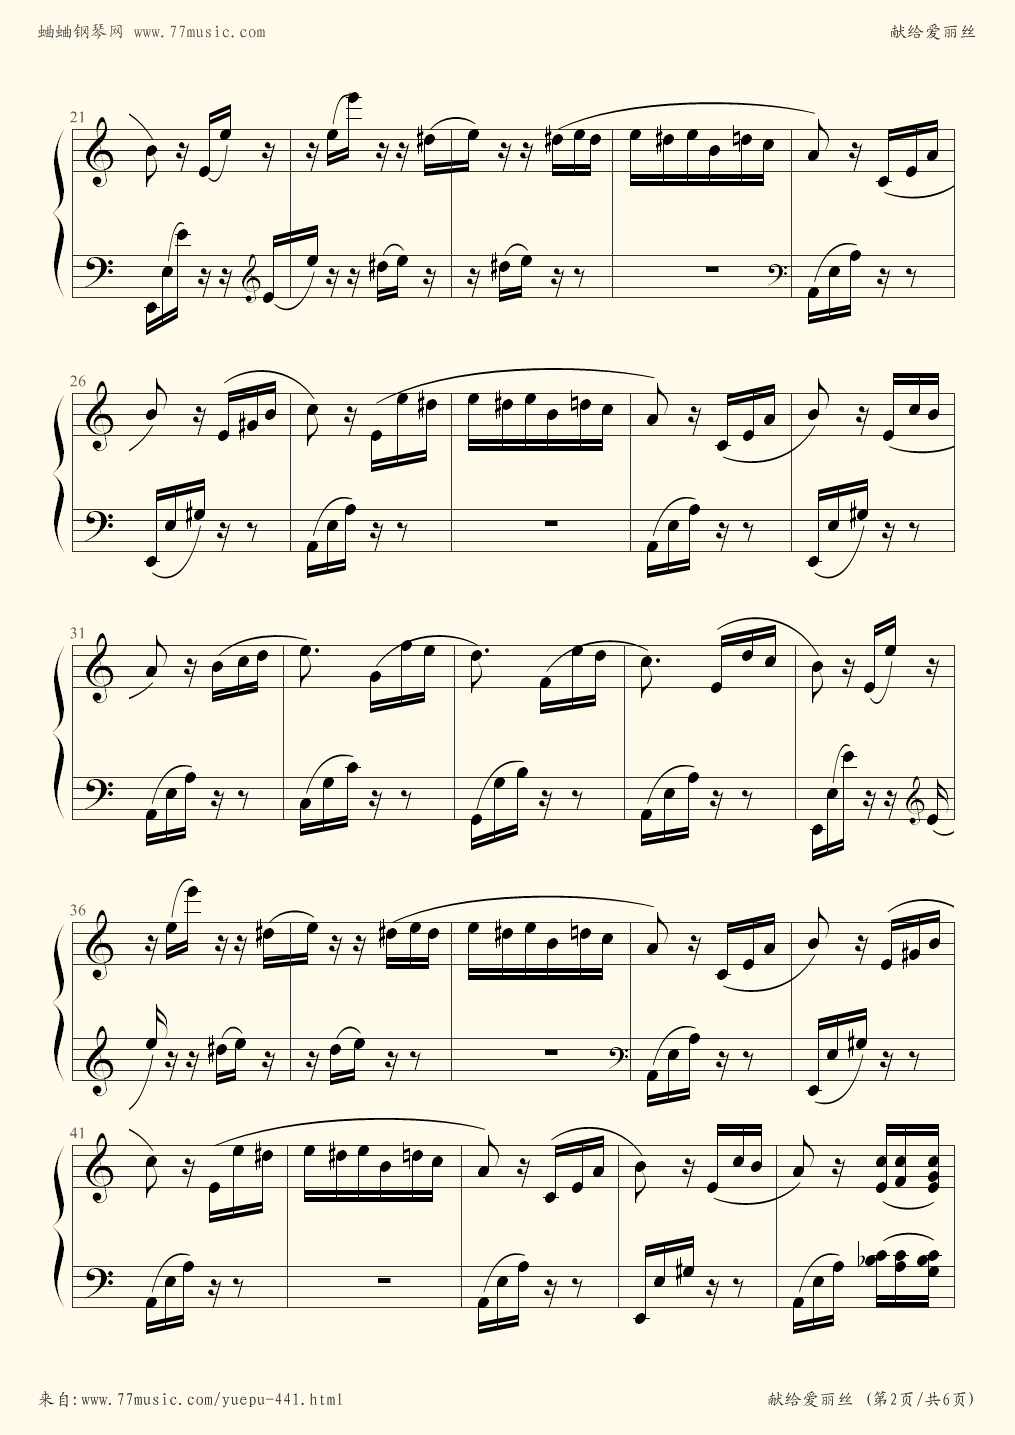 For Elise - Ludwig van Beethoven - Flash Piano Sheet Music Free